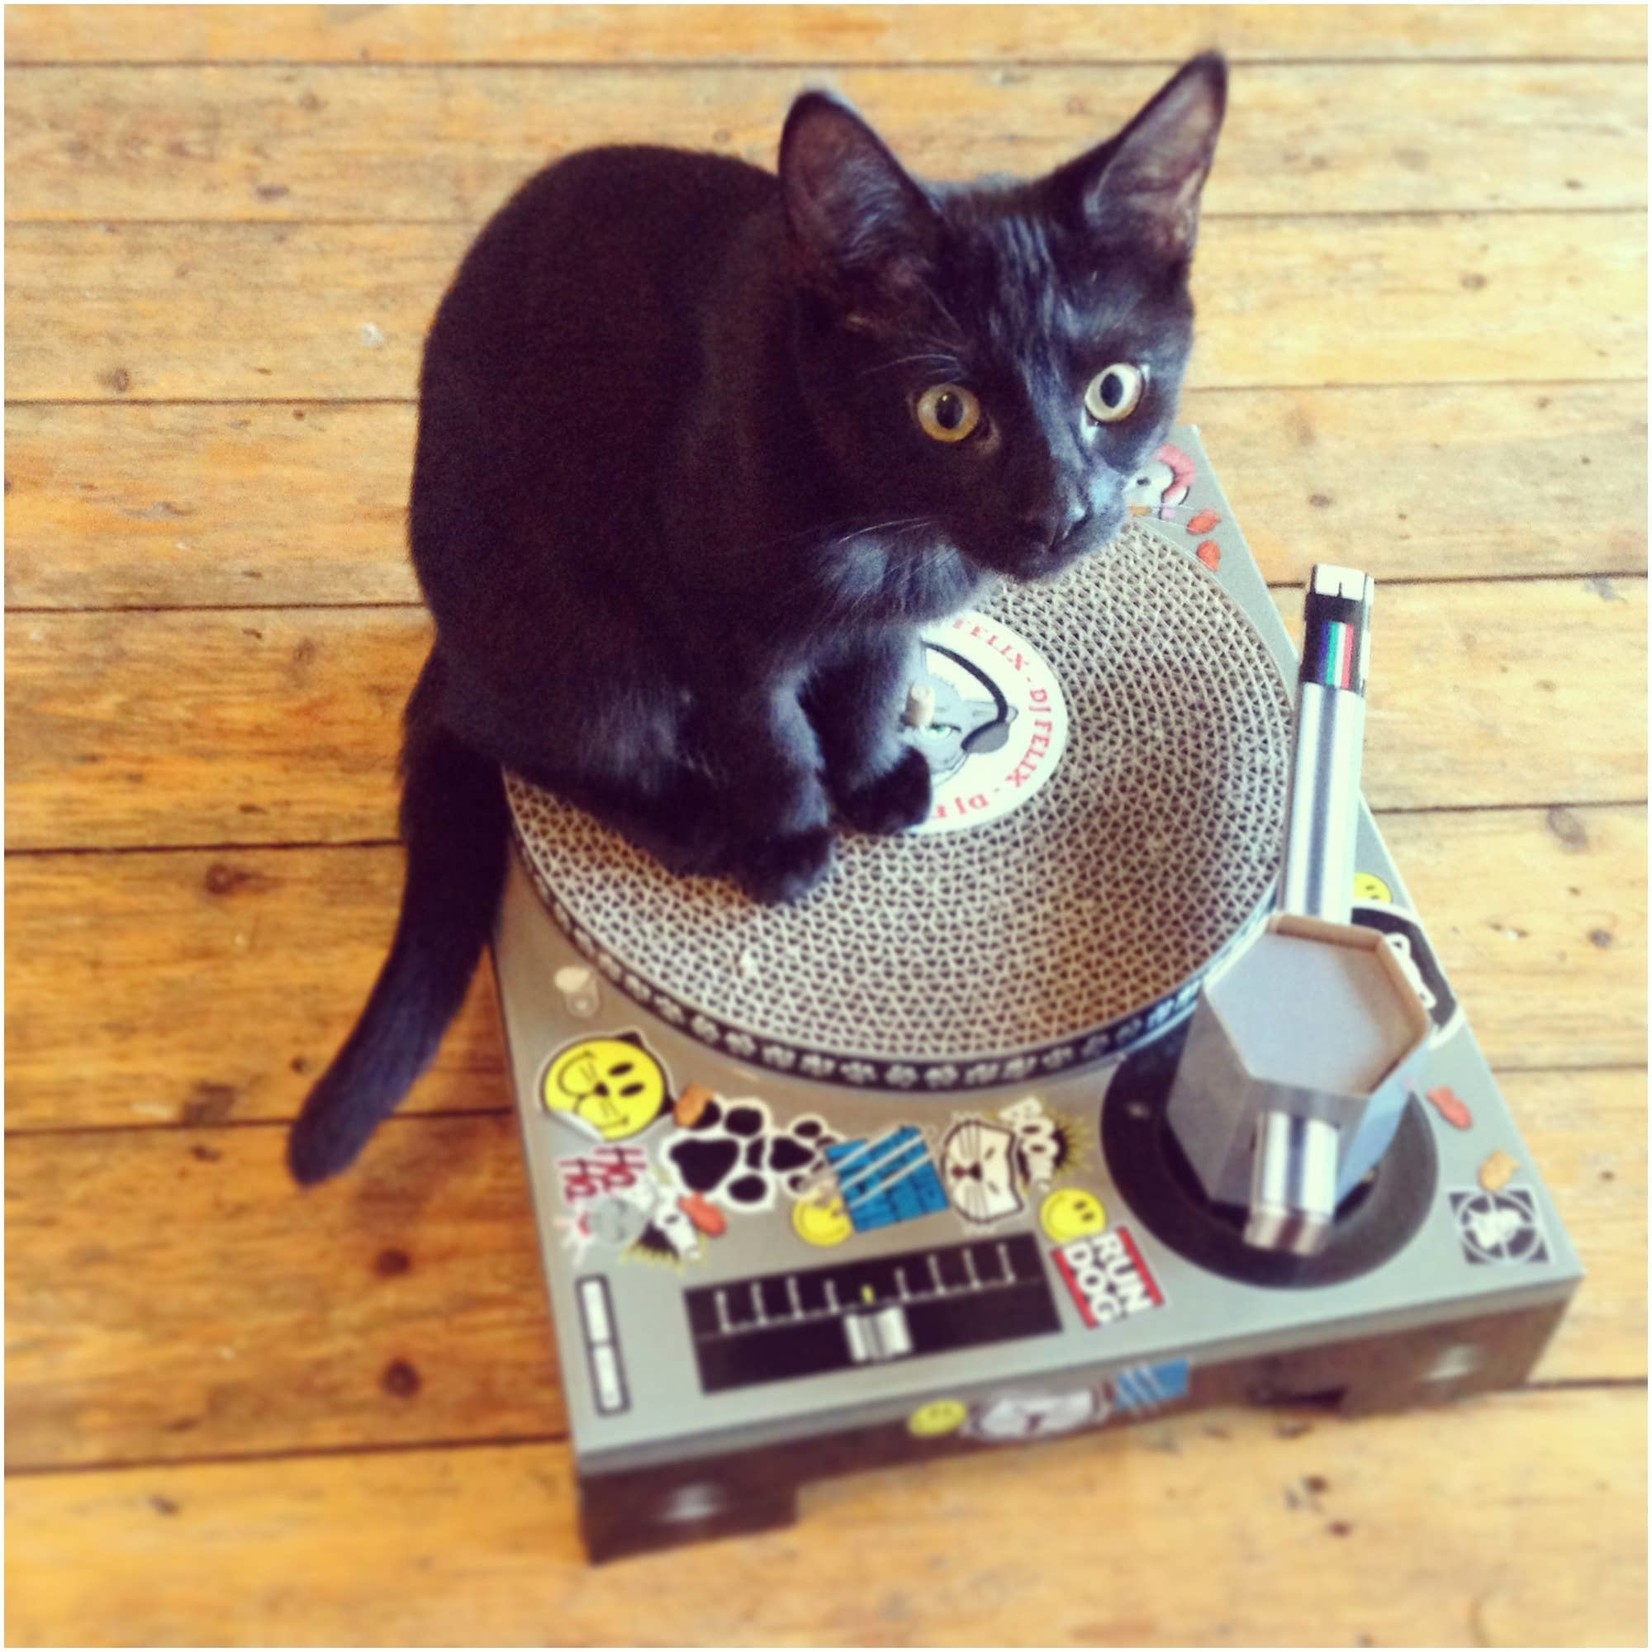 SUCK US Cat Scratch DJ Decks